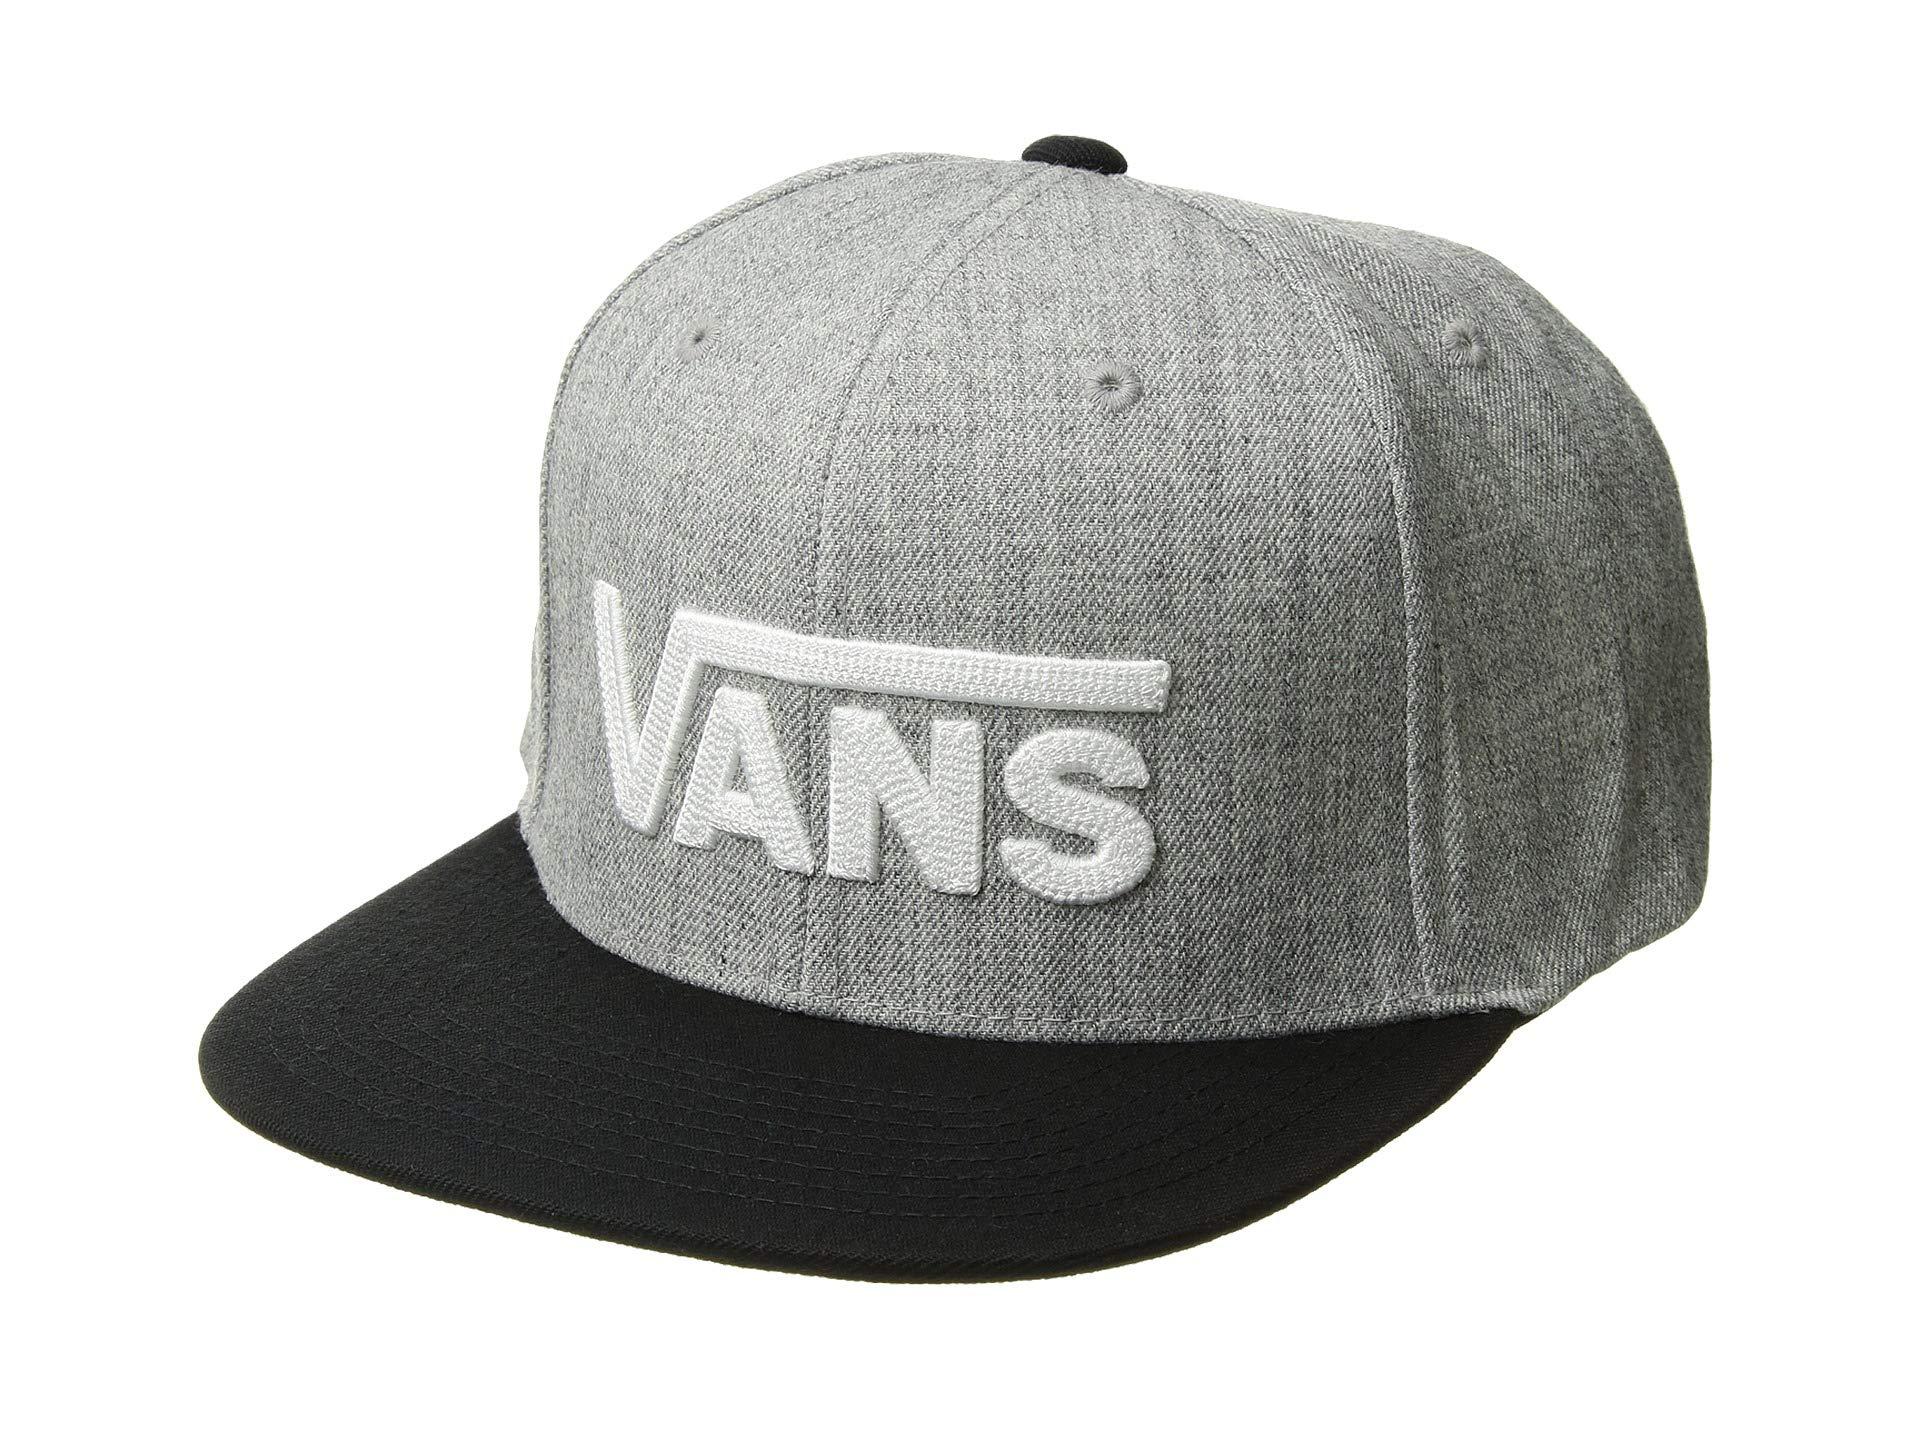 Vans Drop V Snapback Hat in Gray for Men - Lyst